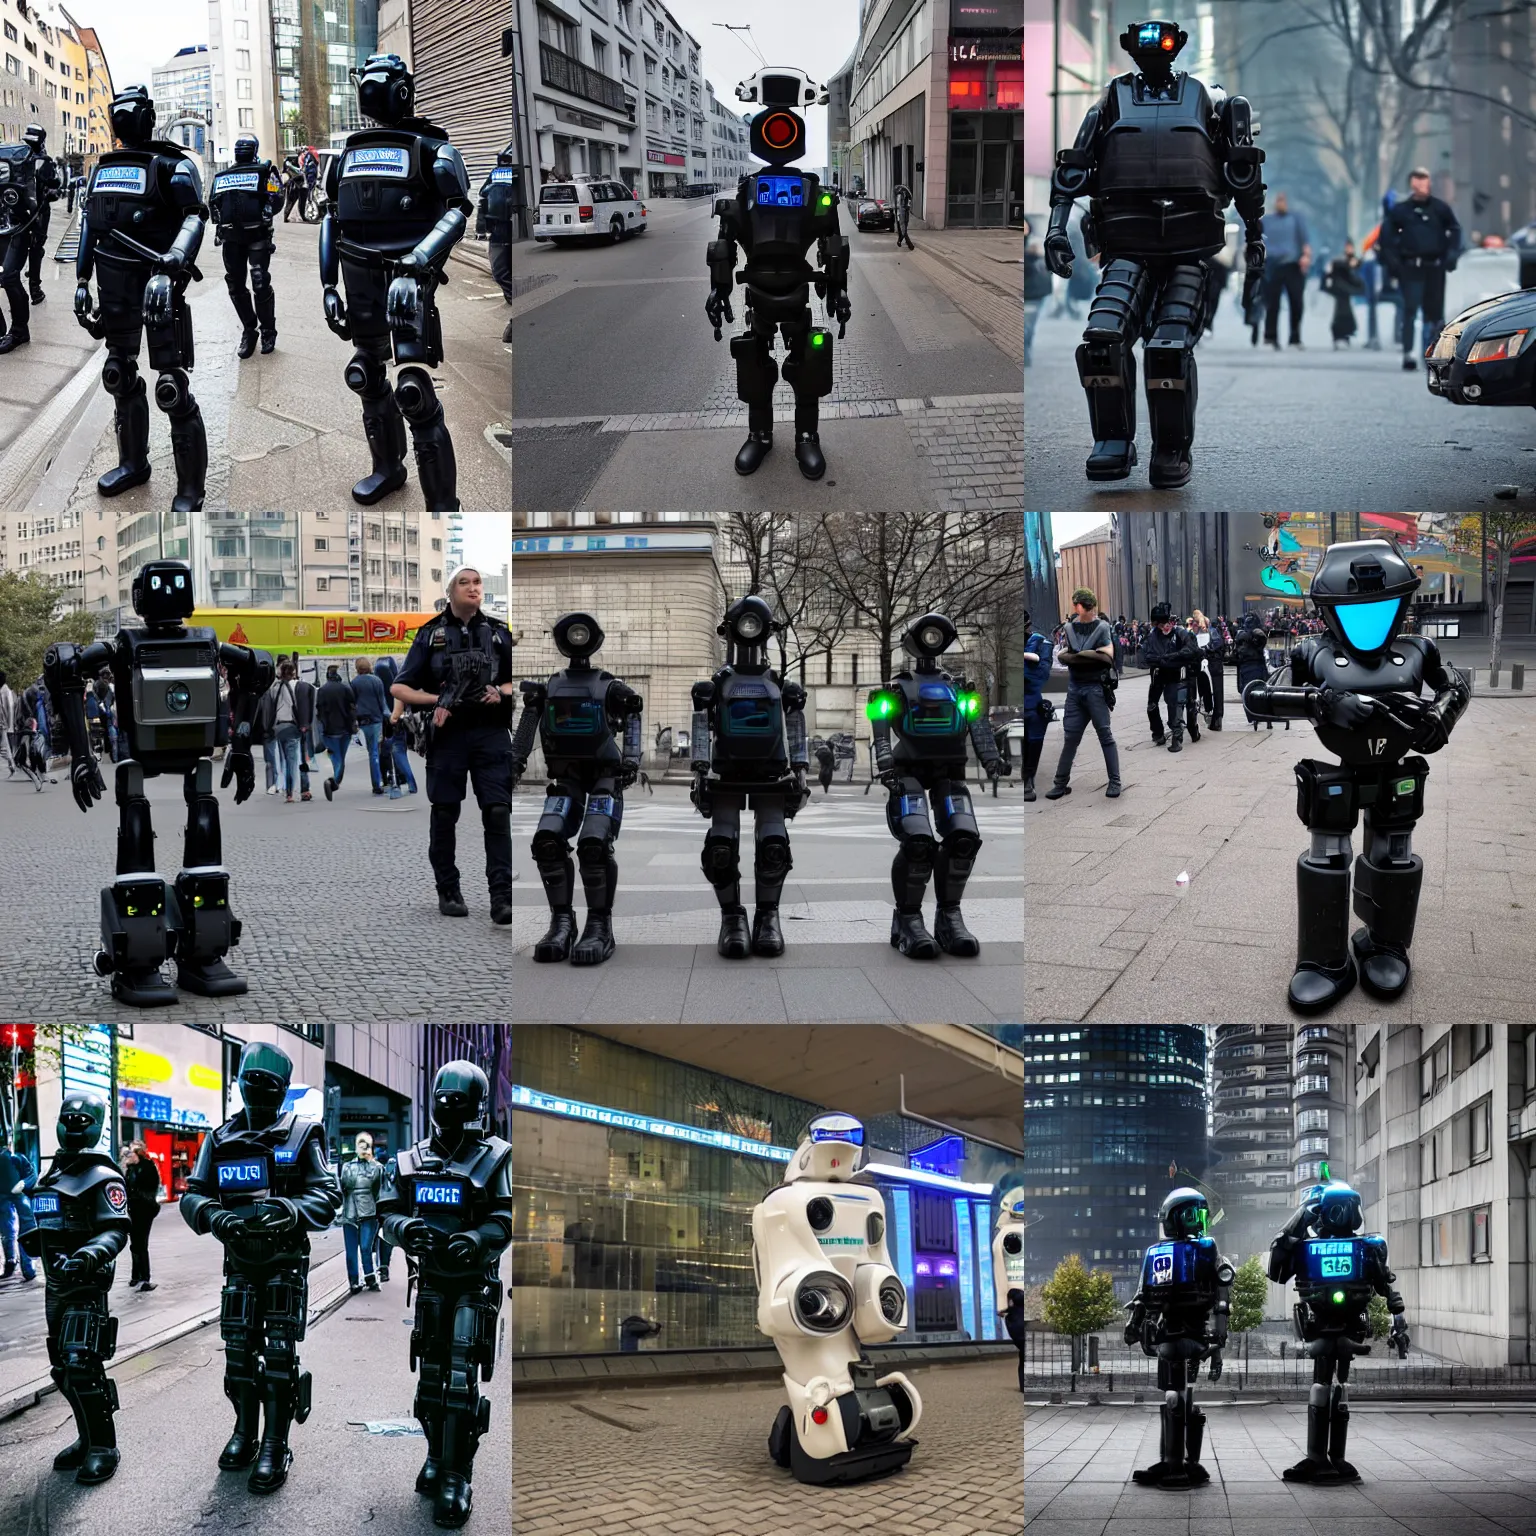 Prompt: Cyberpunk police robots invading berlin